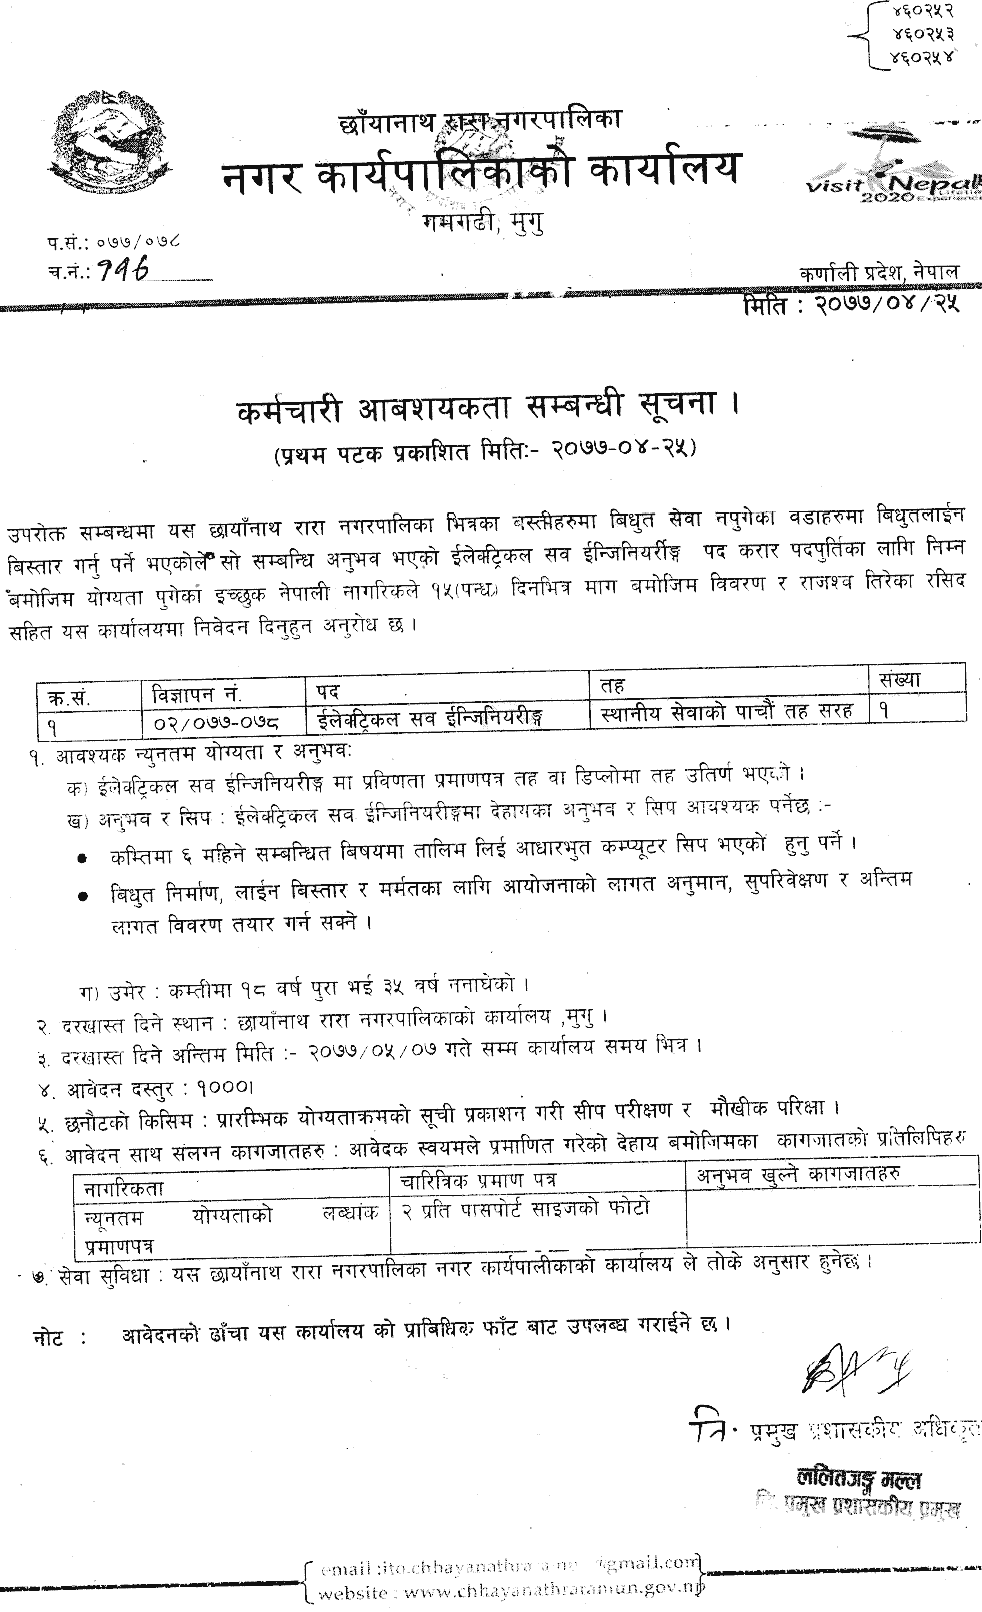 Chhayanath Rara Municipality Vacancy for Electrical Sub Engineer